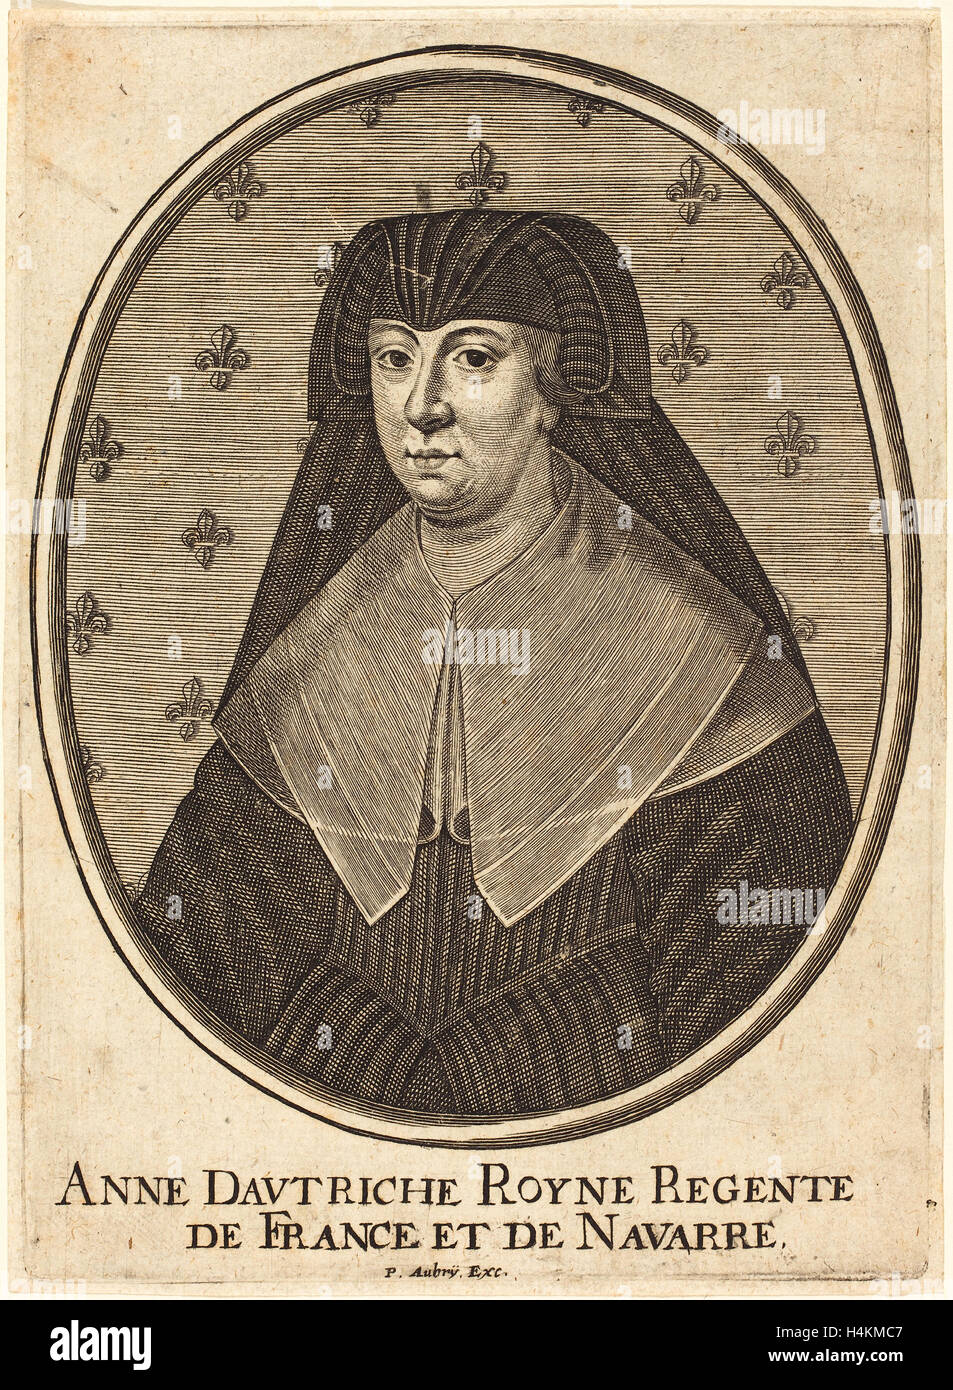 Pierre Aubry (francés, 1610 - 1686), Ana de Austria, grabado sobre papel establecido Foto de stock